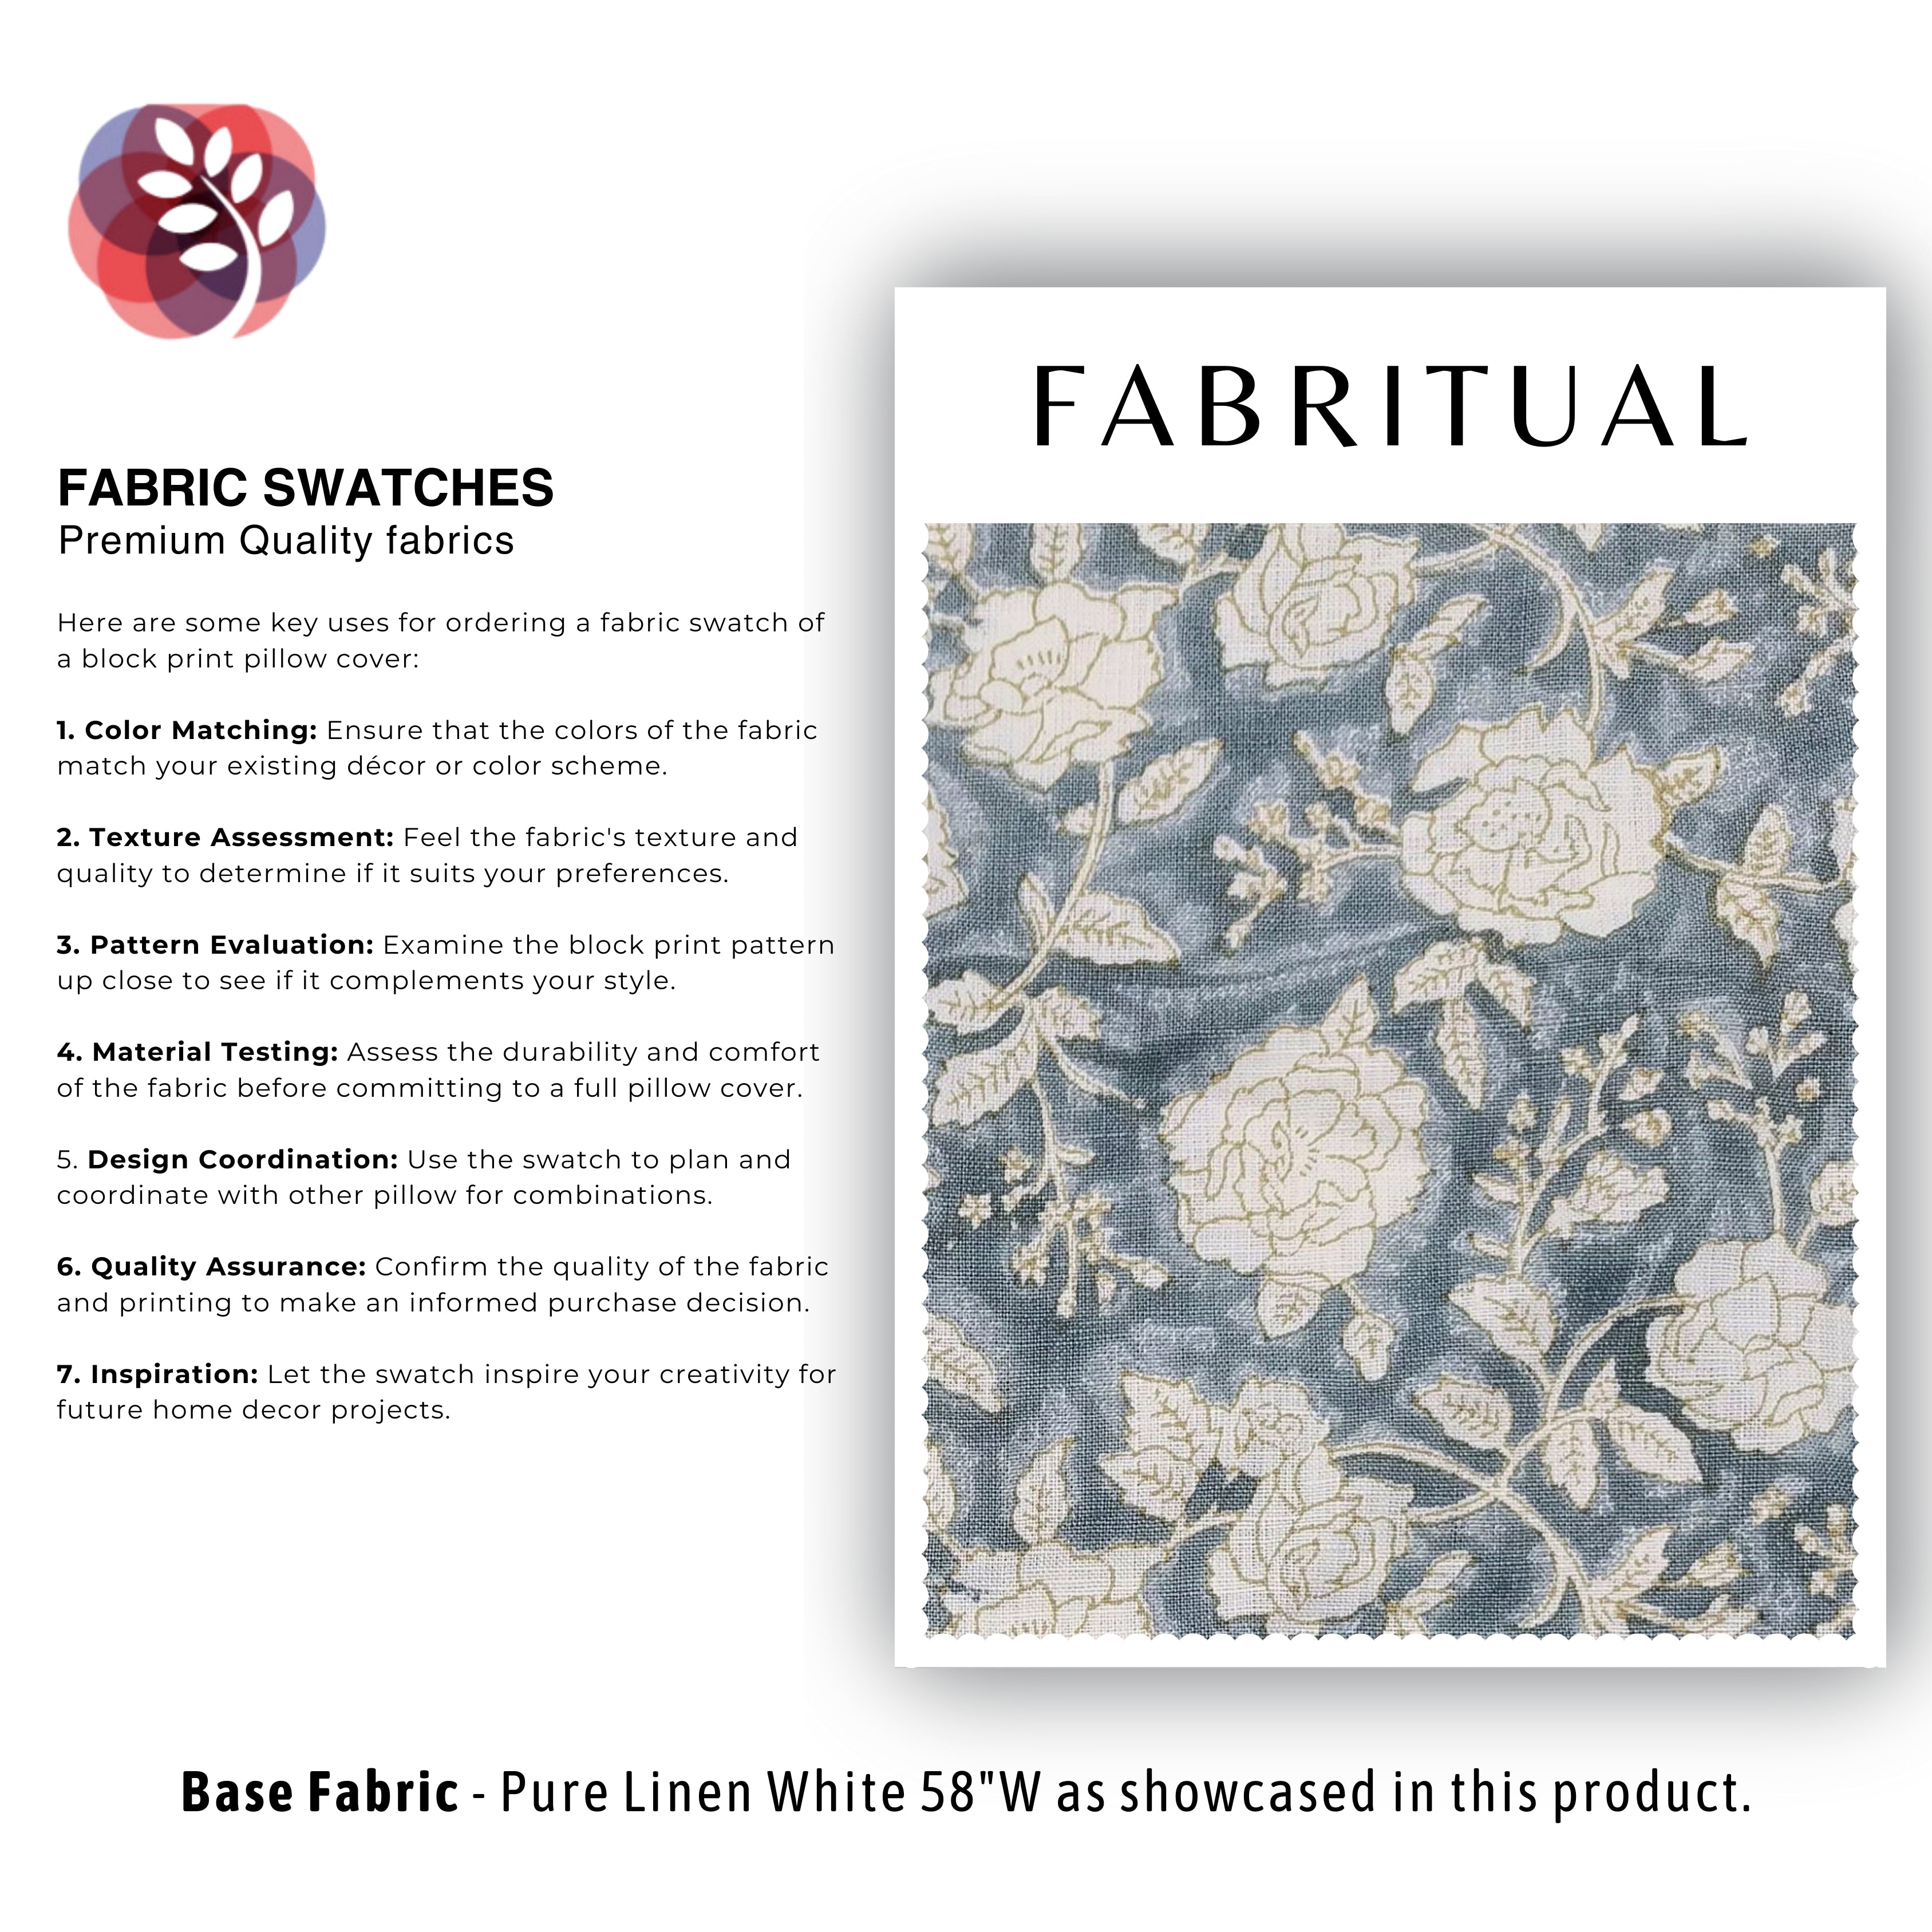 Block Print Linen Fabric, Rameshwaram  White Base Linen For Upholstery, Home Decor Linen, Linen By The Yard, Greyish Blue Colour Design, Home Docor And Gift